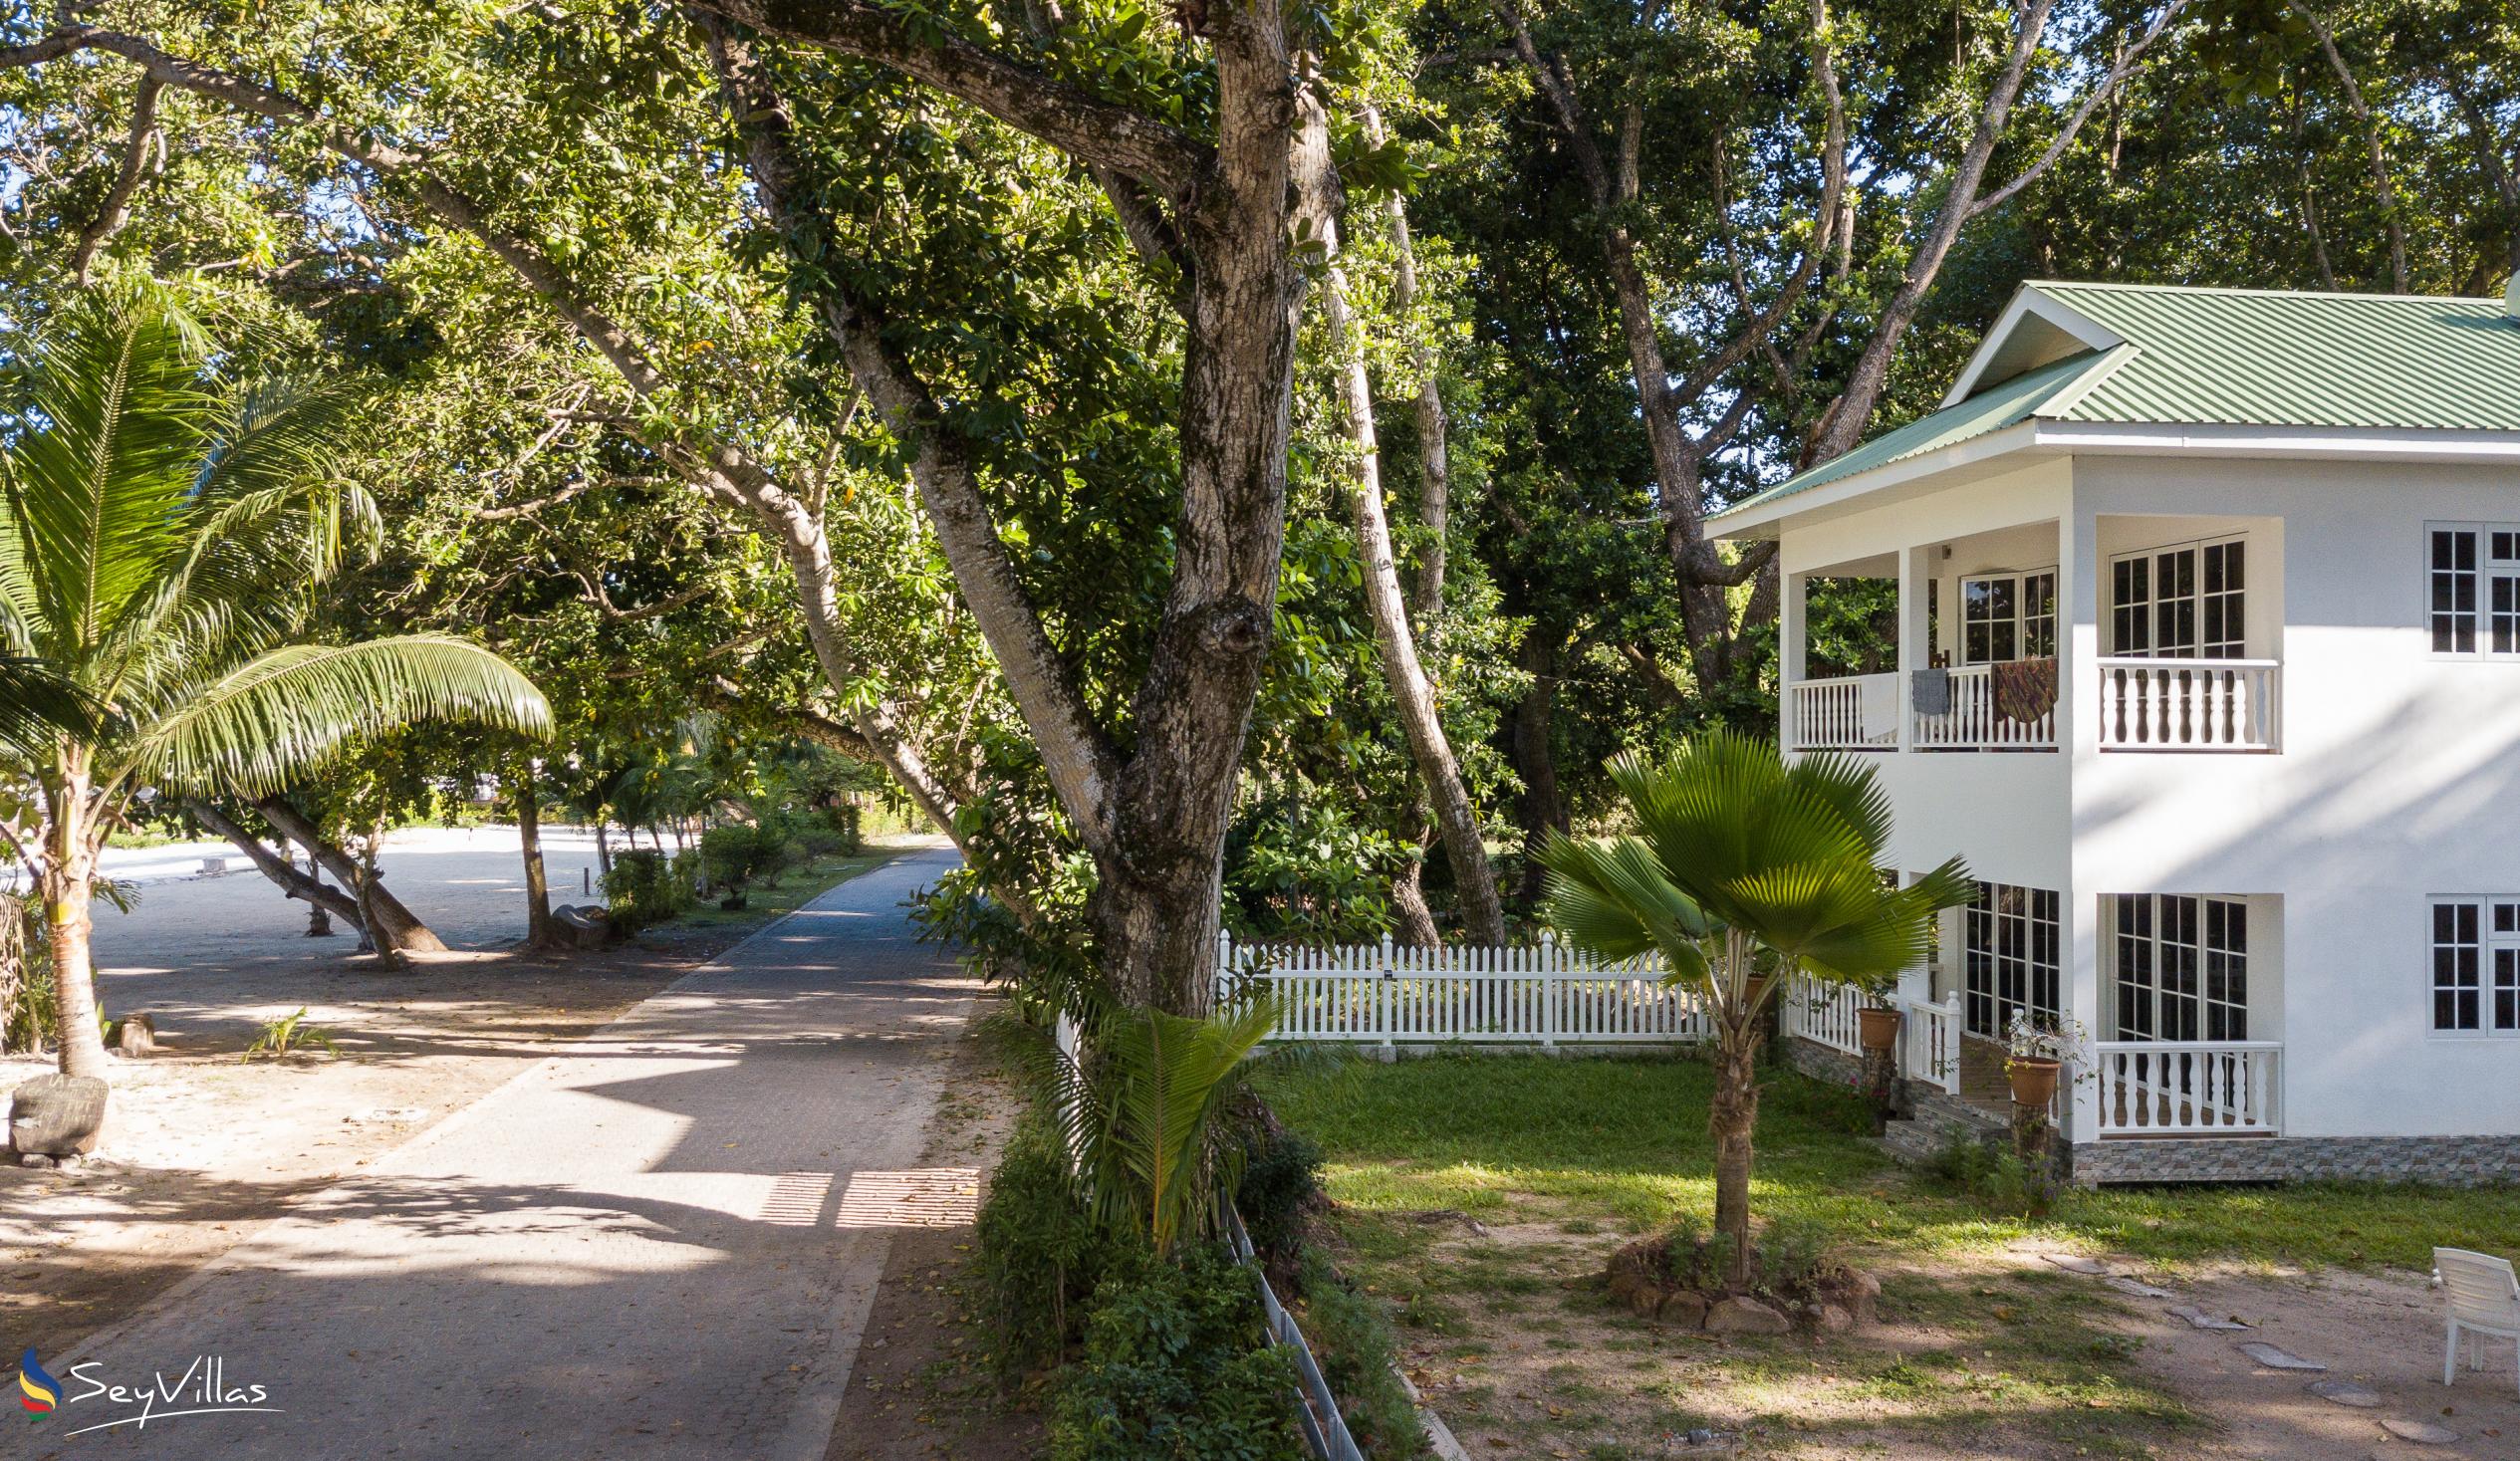 Foto 6: Villa Charette - Aussenbereich - La Digue (Seychellen)